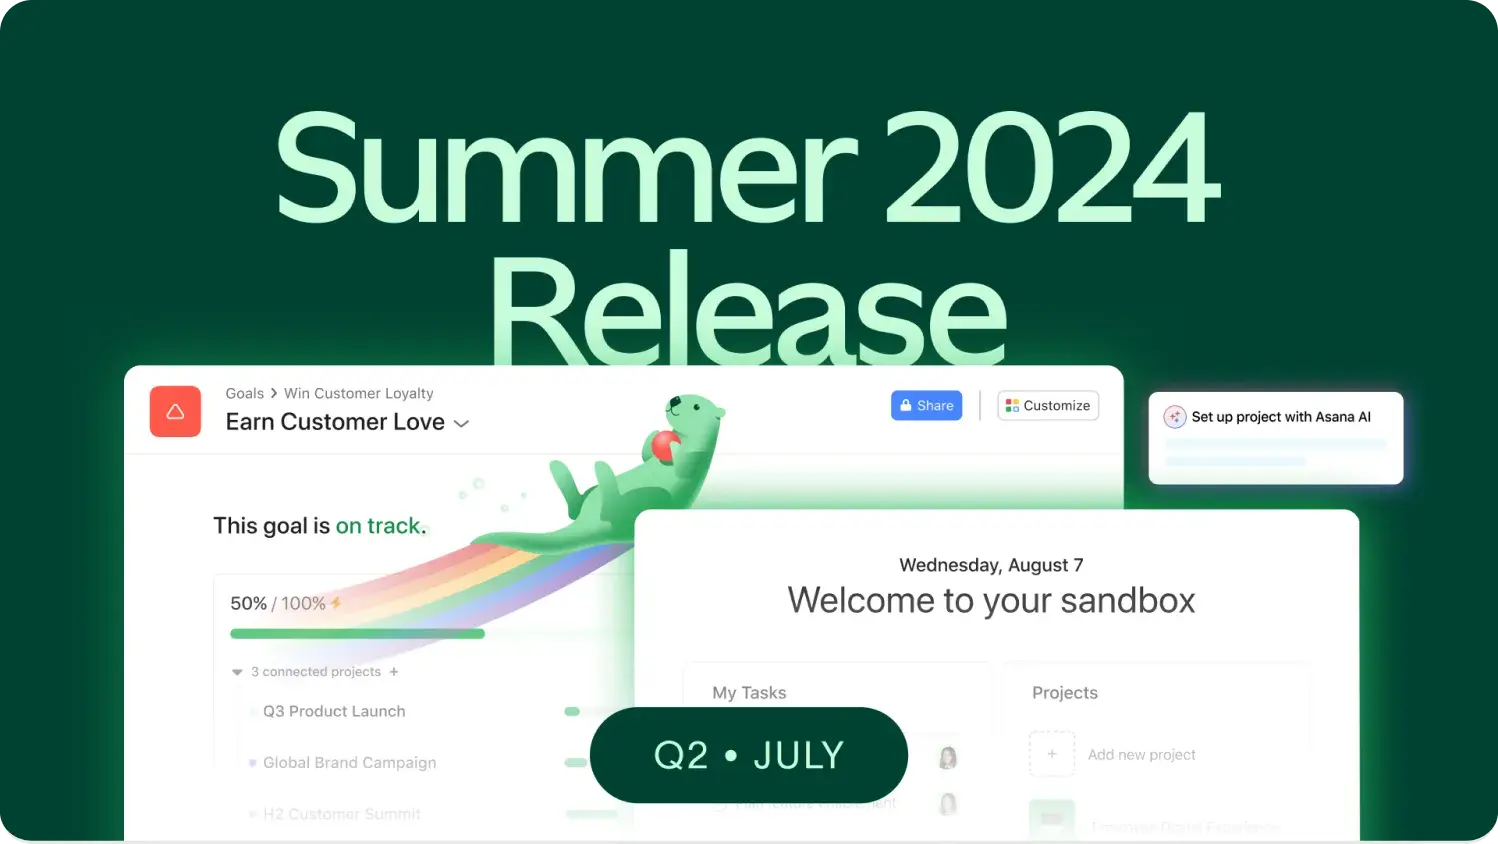 Summer 2024 Release Marketing